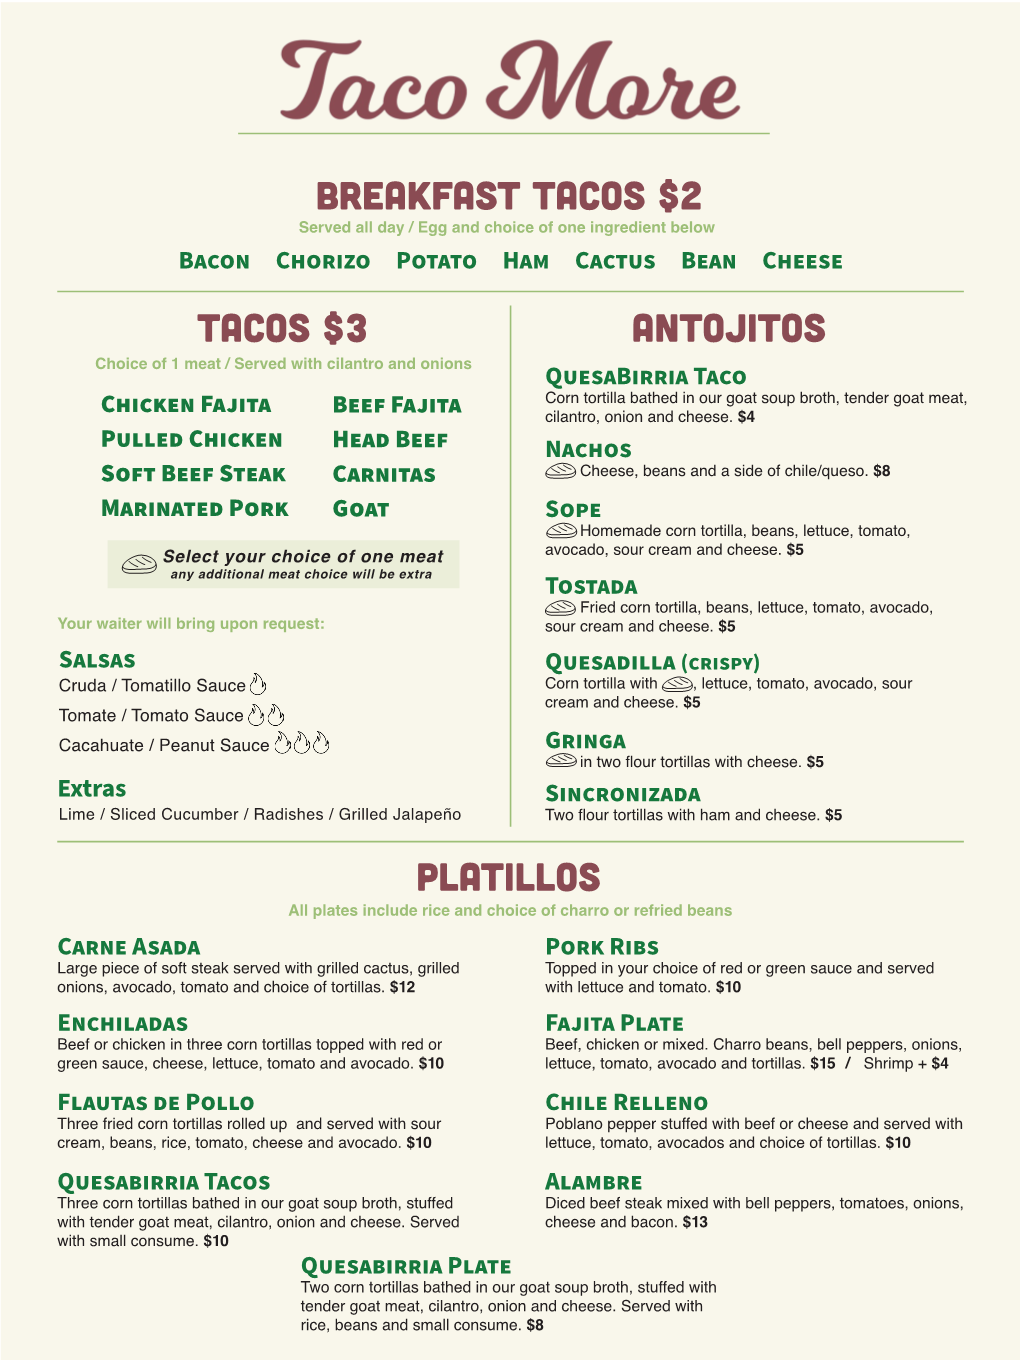 ANTOJITOS Breakfast Tacos $2 Tacos $3 Platillos